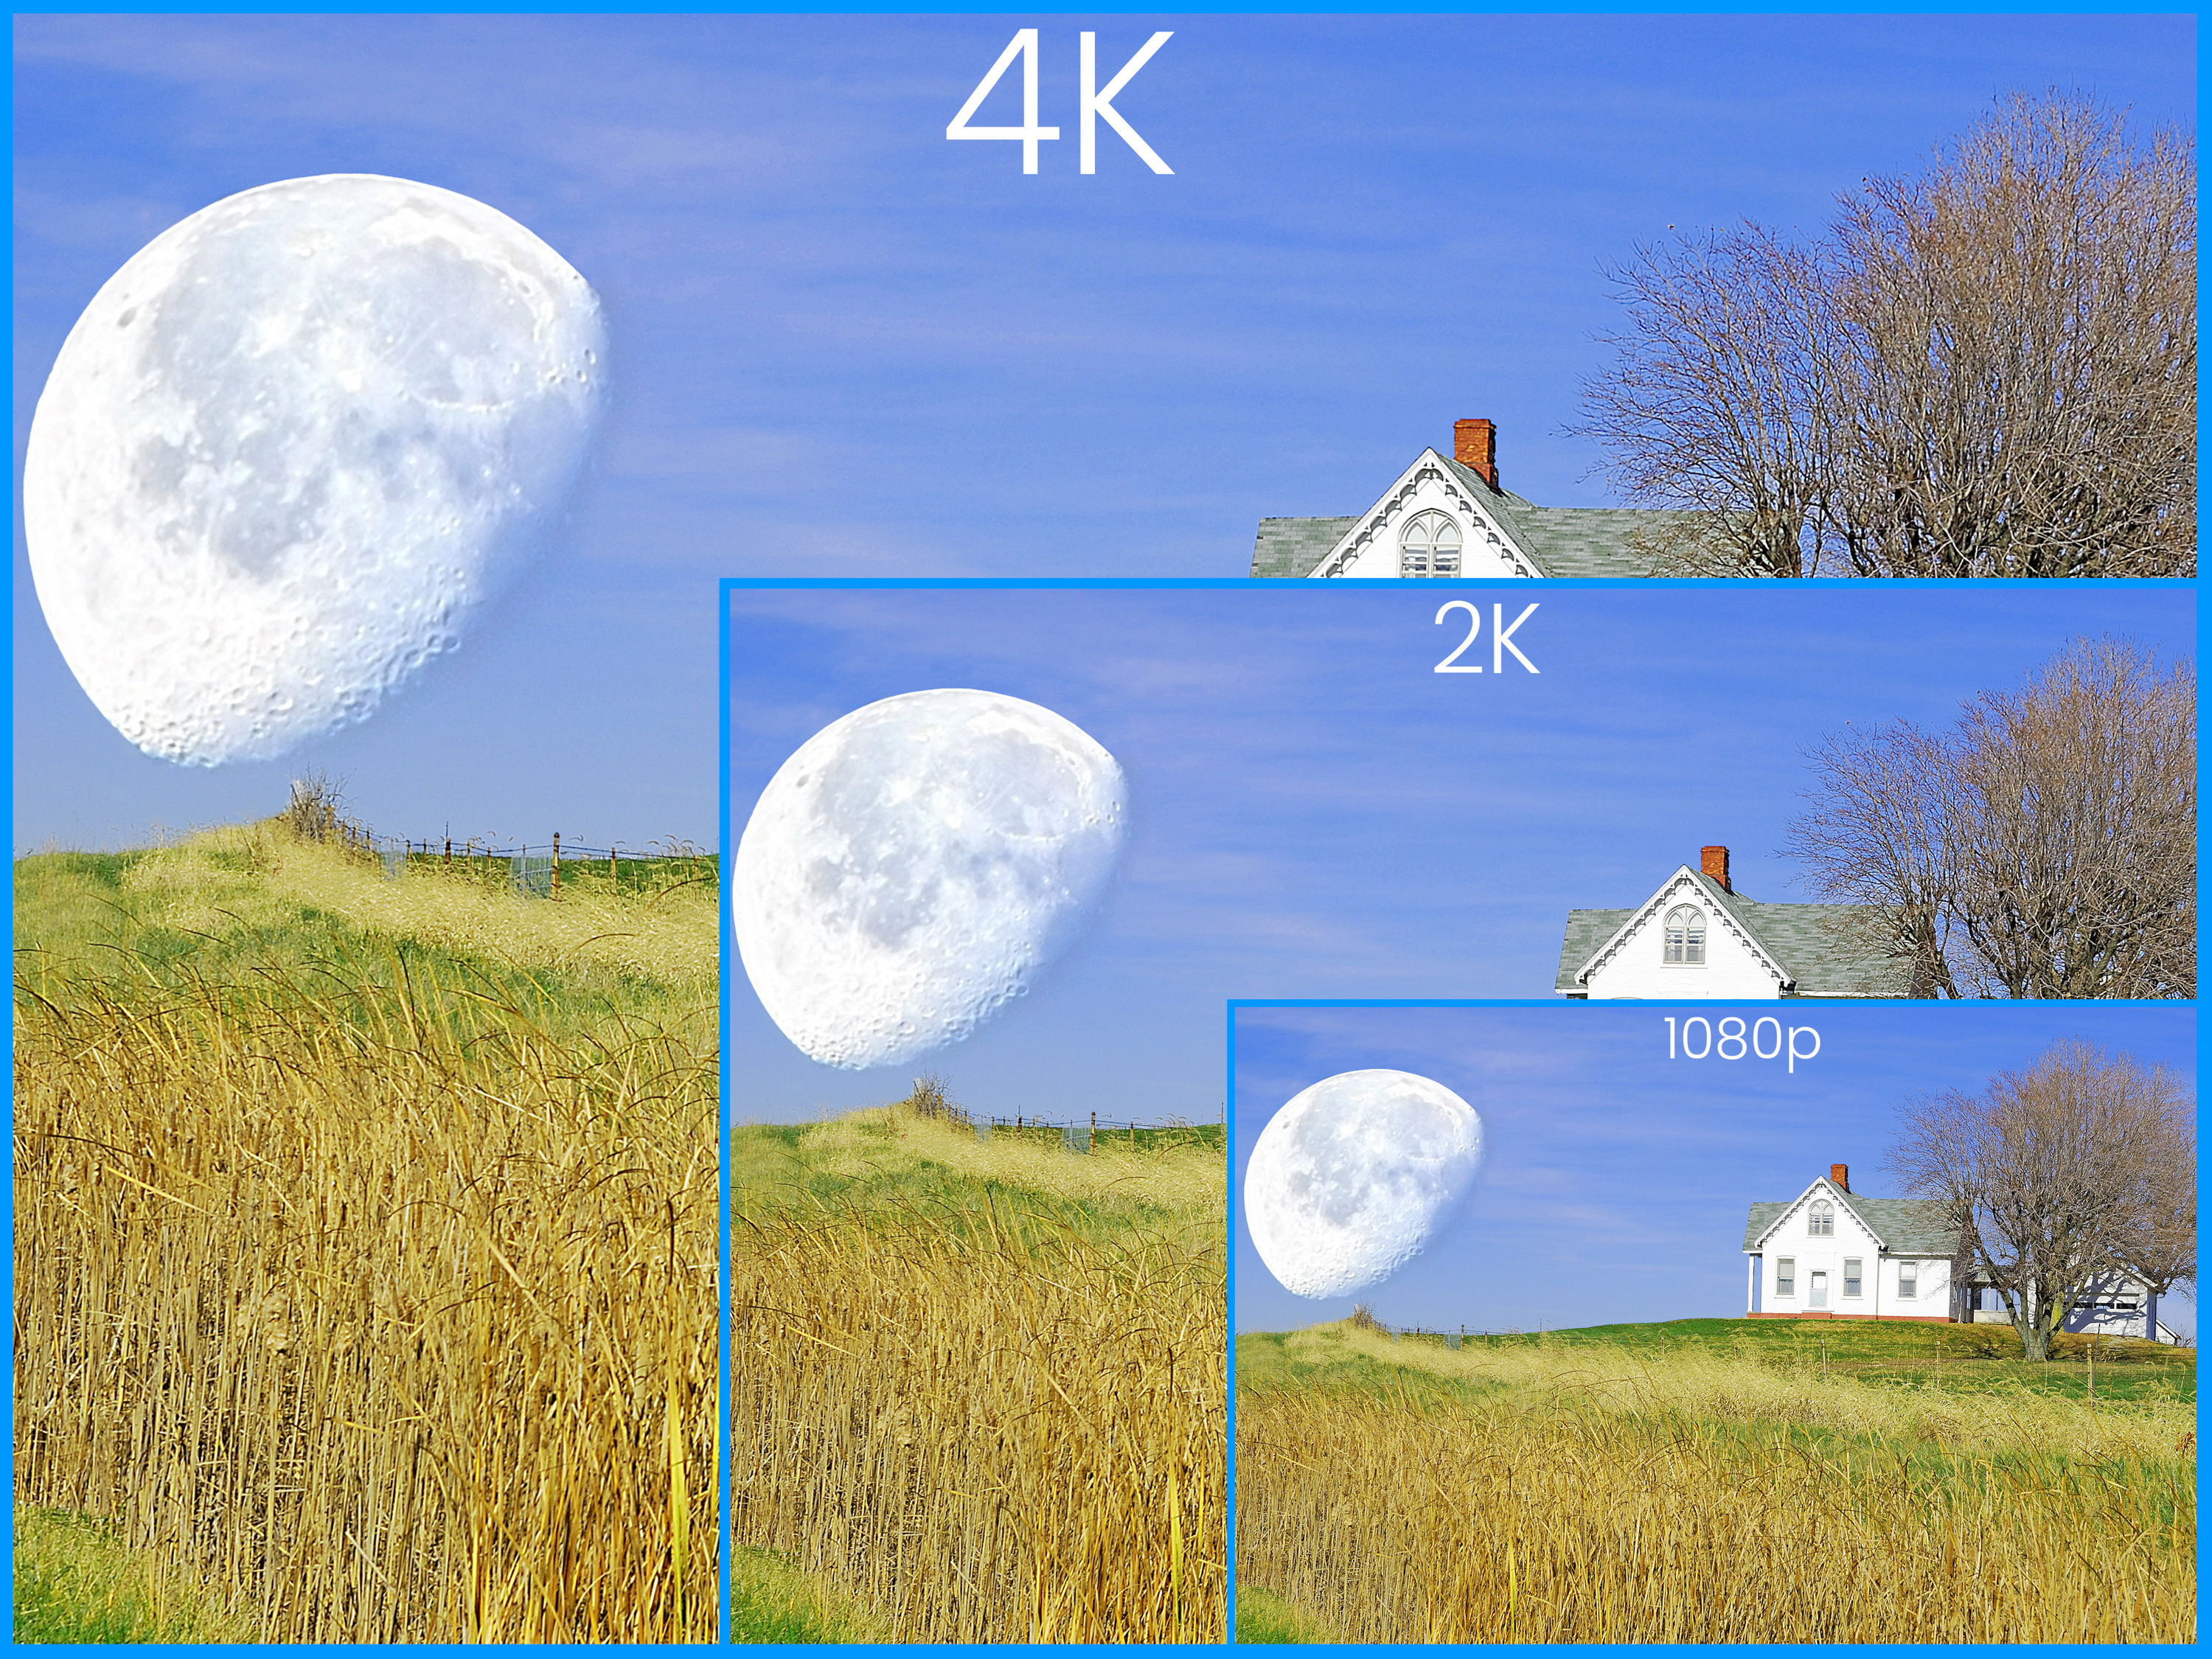 4K resolution comparison